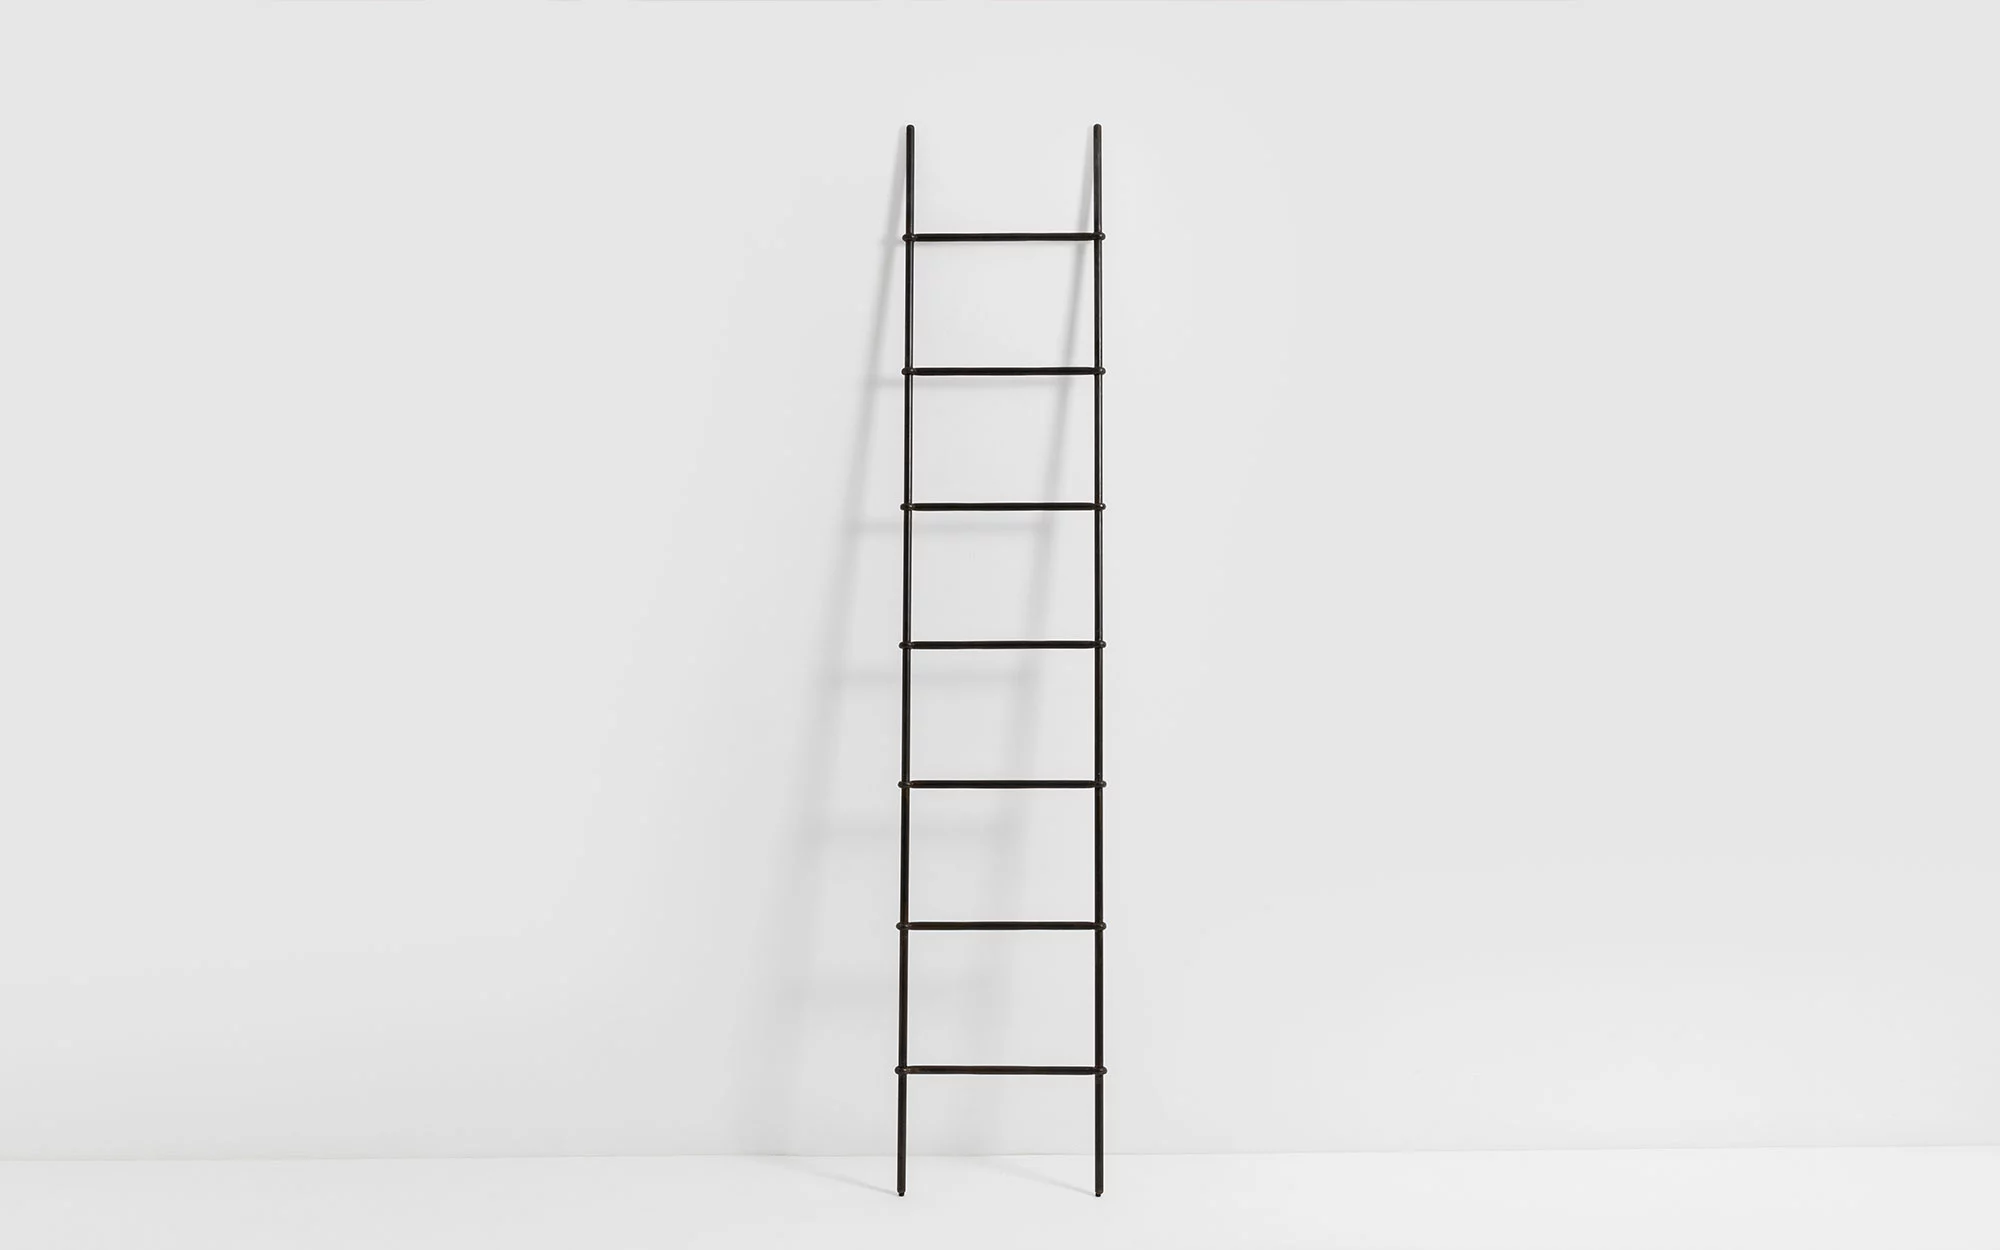 Ciel ladder - Ronan & Erwan Bouroullec - Carpet - Galerie kreo